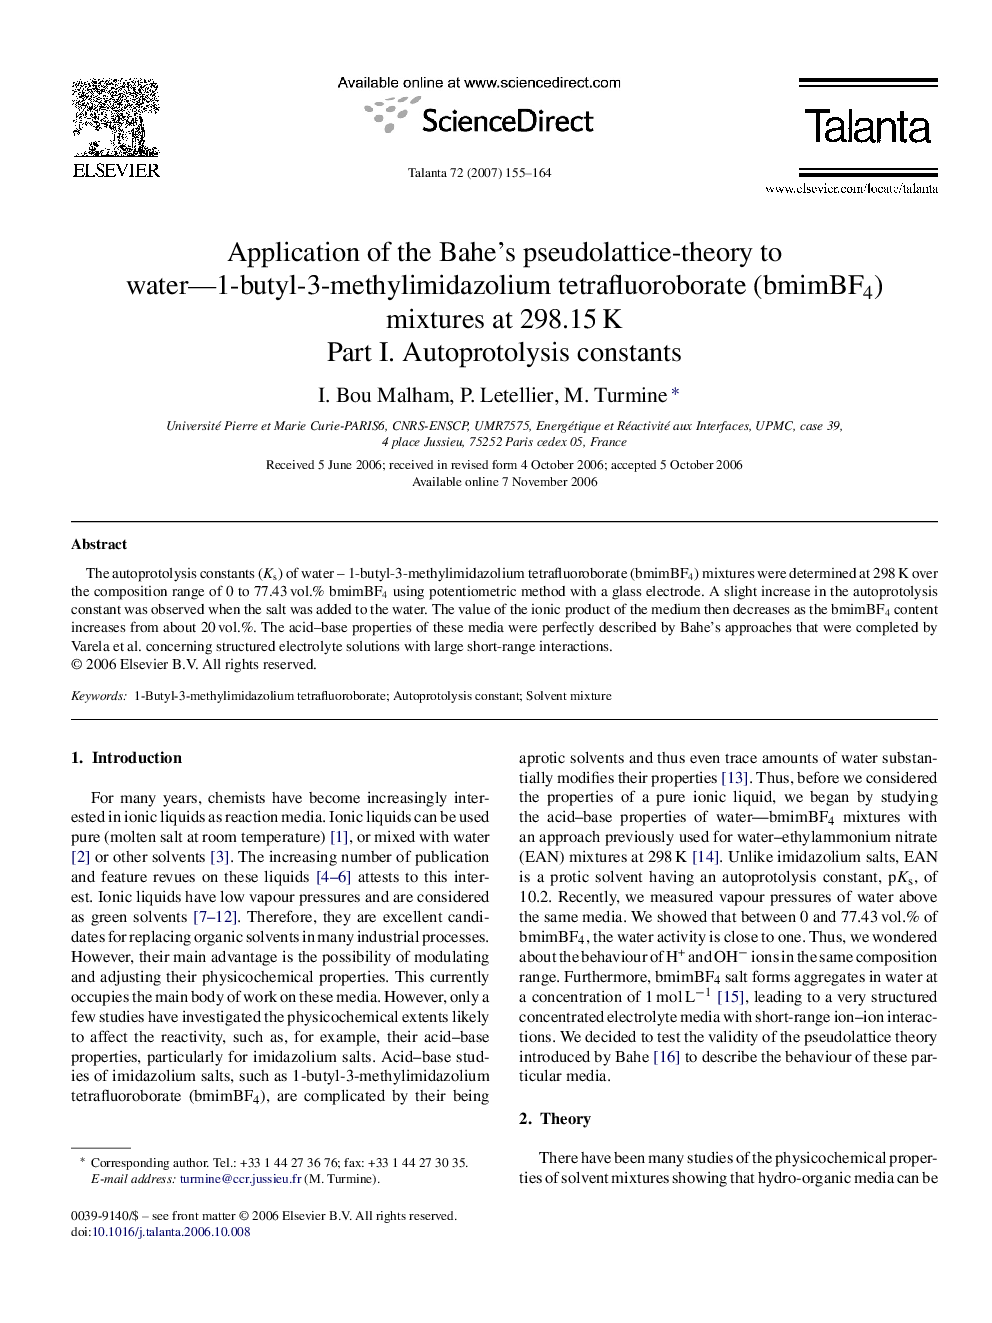 Application of the Bahe's pseudolattice-theory to water—1-butyl-3-methylimidazolium tetrafluoroborate (bmimBF4) mixtures at 298.15 K: Part I. Autoprotolysis constants